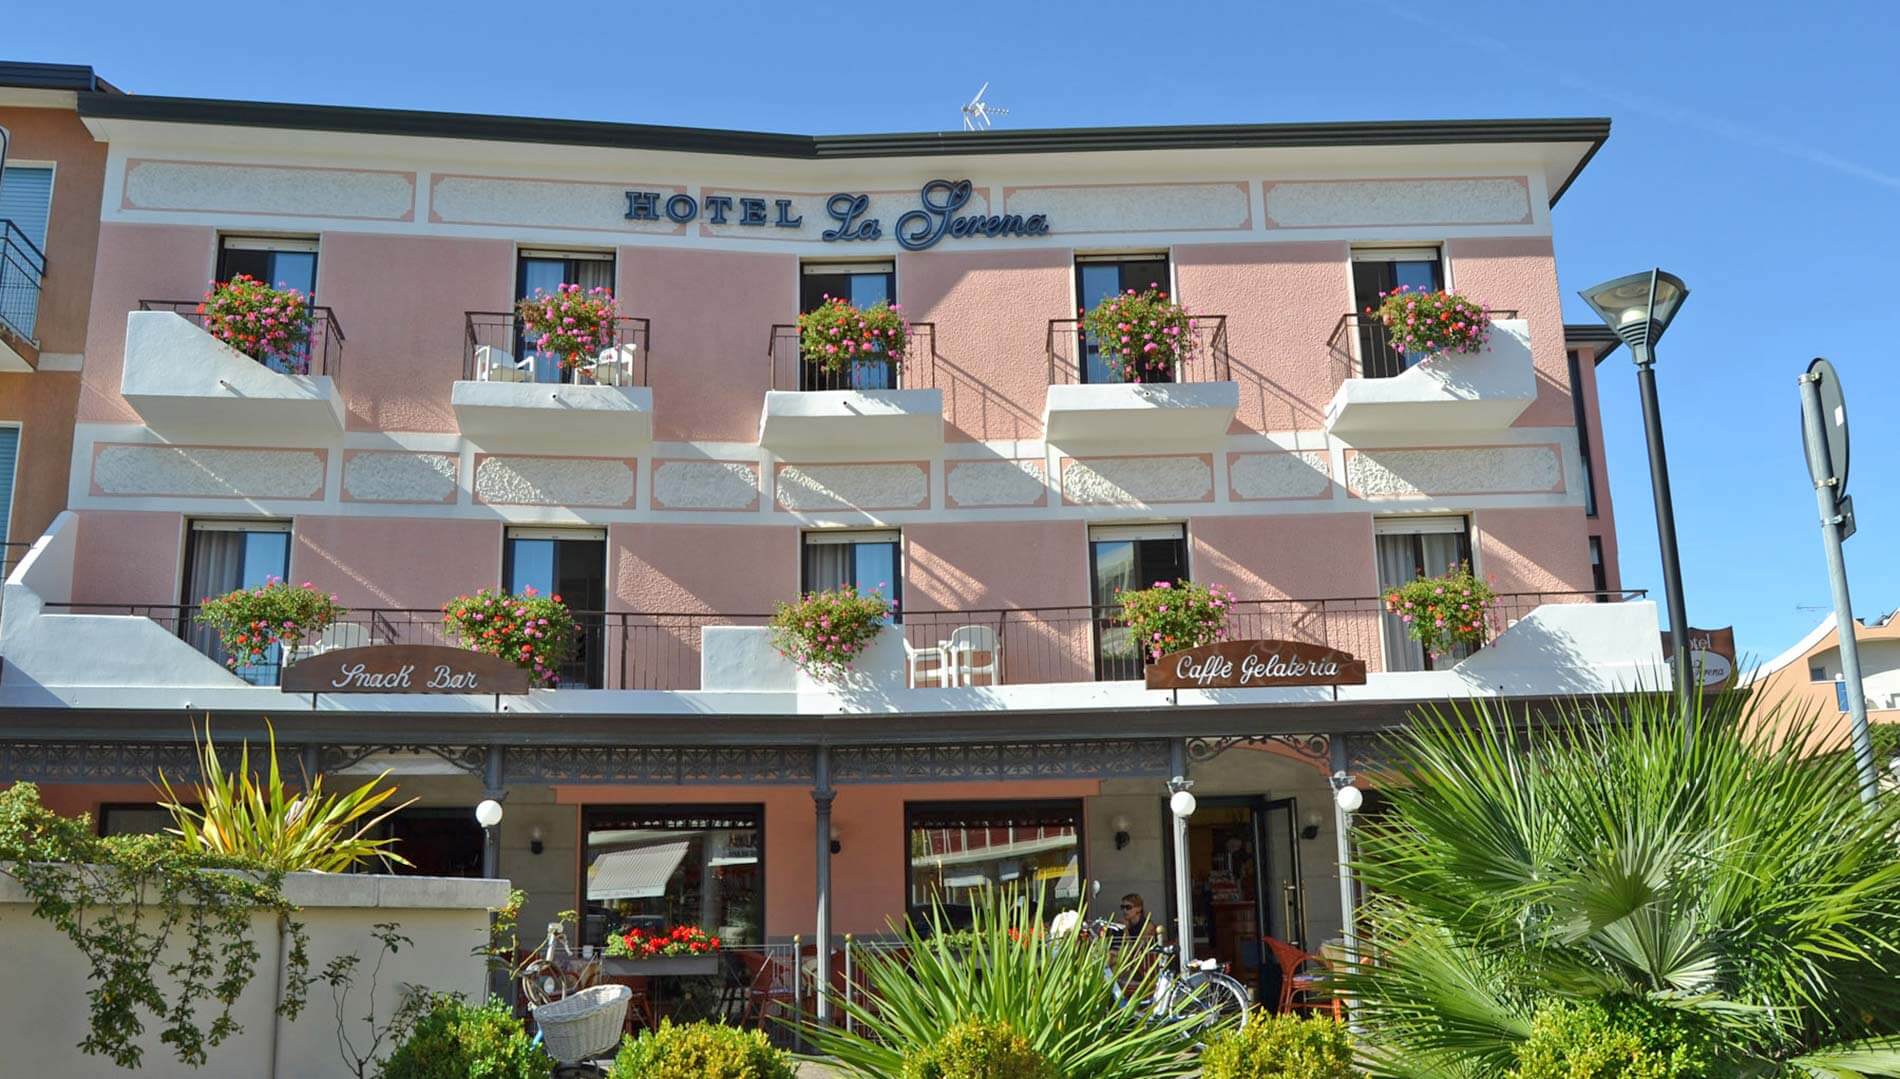 3 Sterne Hotel La Serena - Hotel Bibione buchen